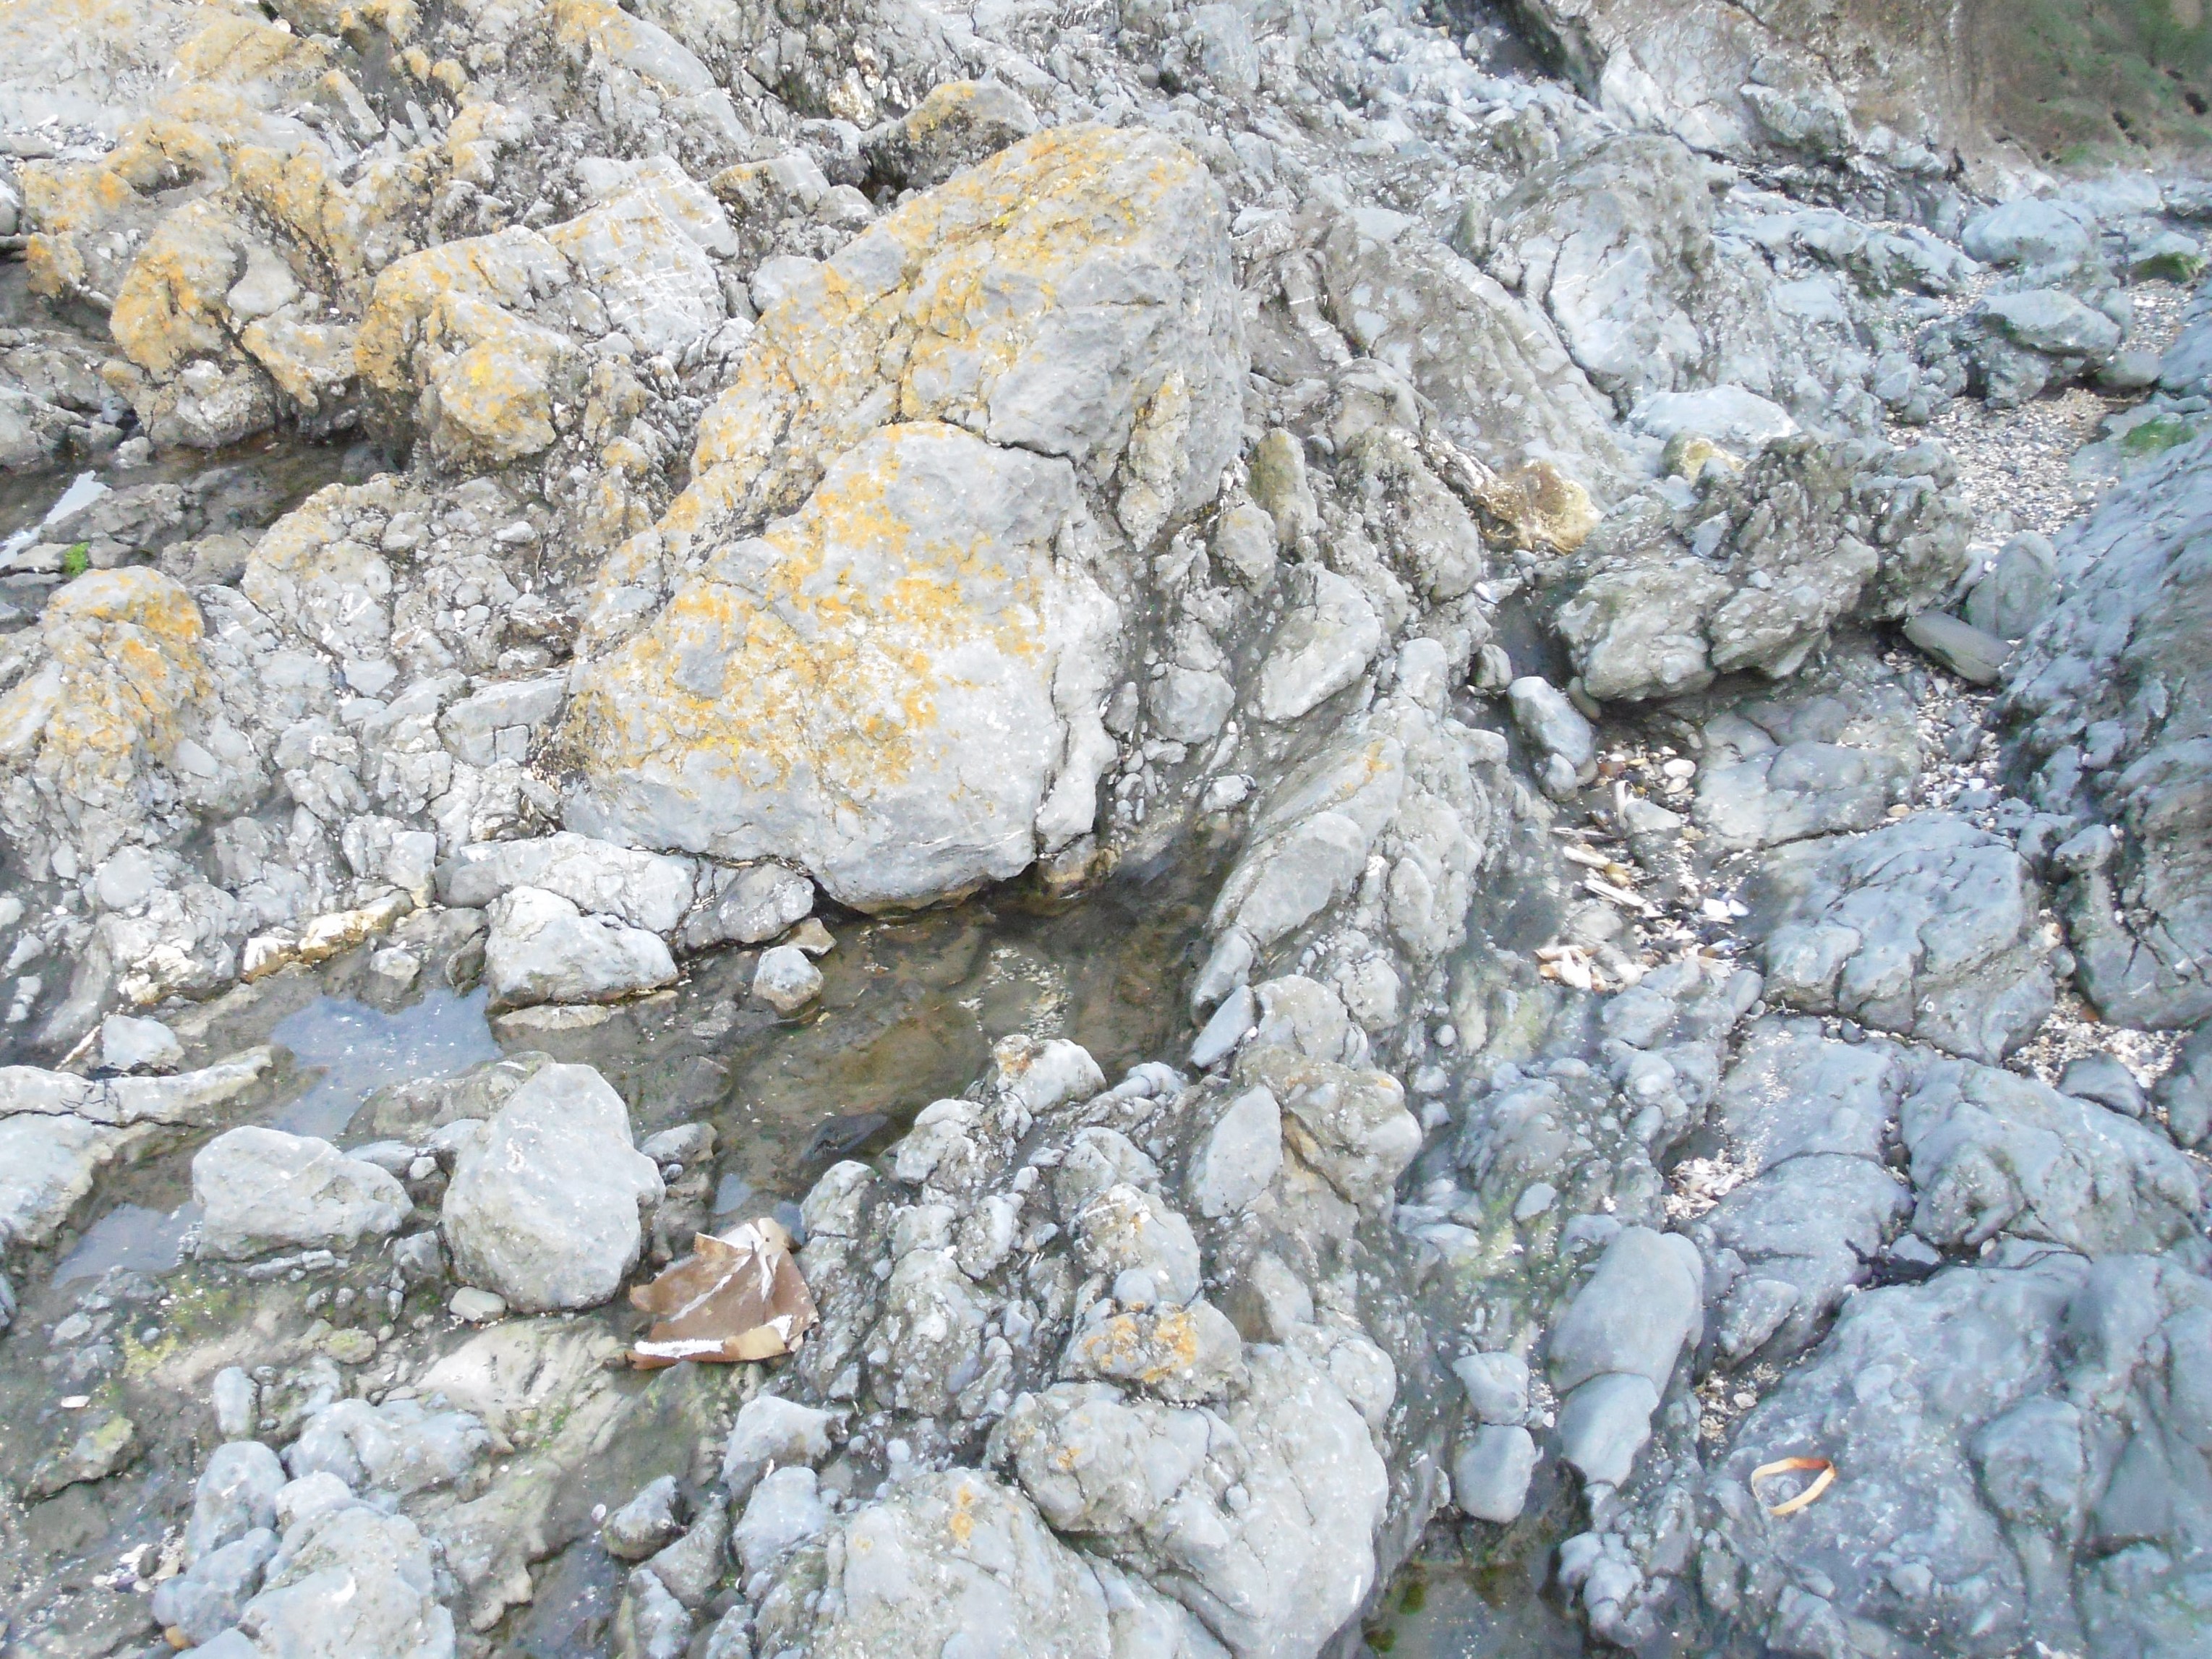 Larger lichen covered blocks which have fallen down into a fine rock matrix